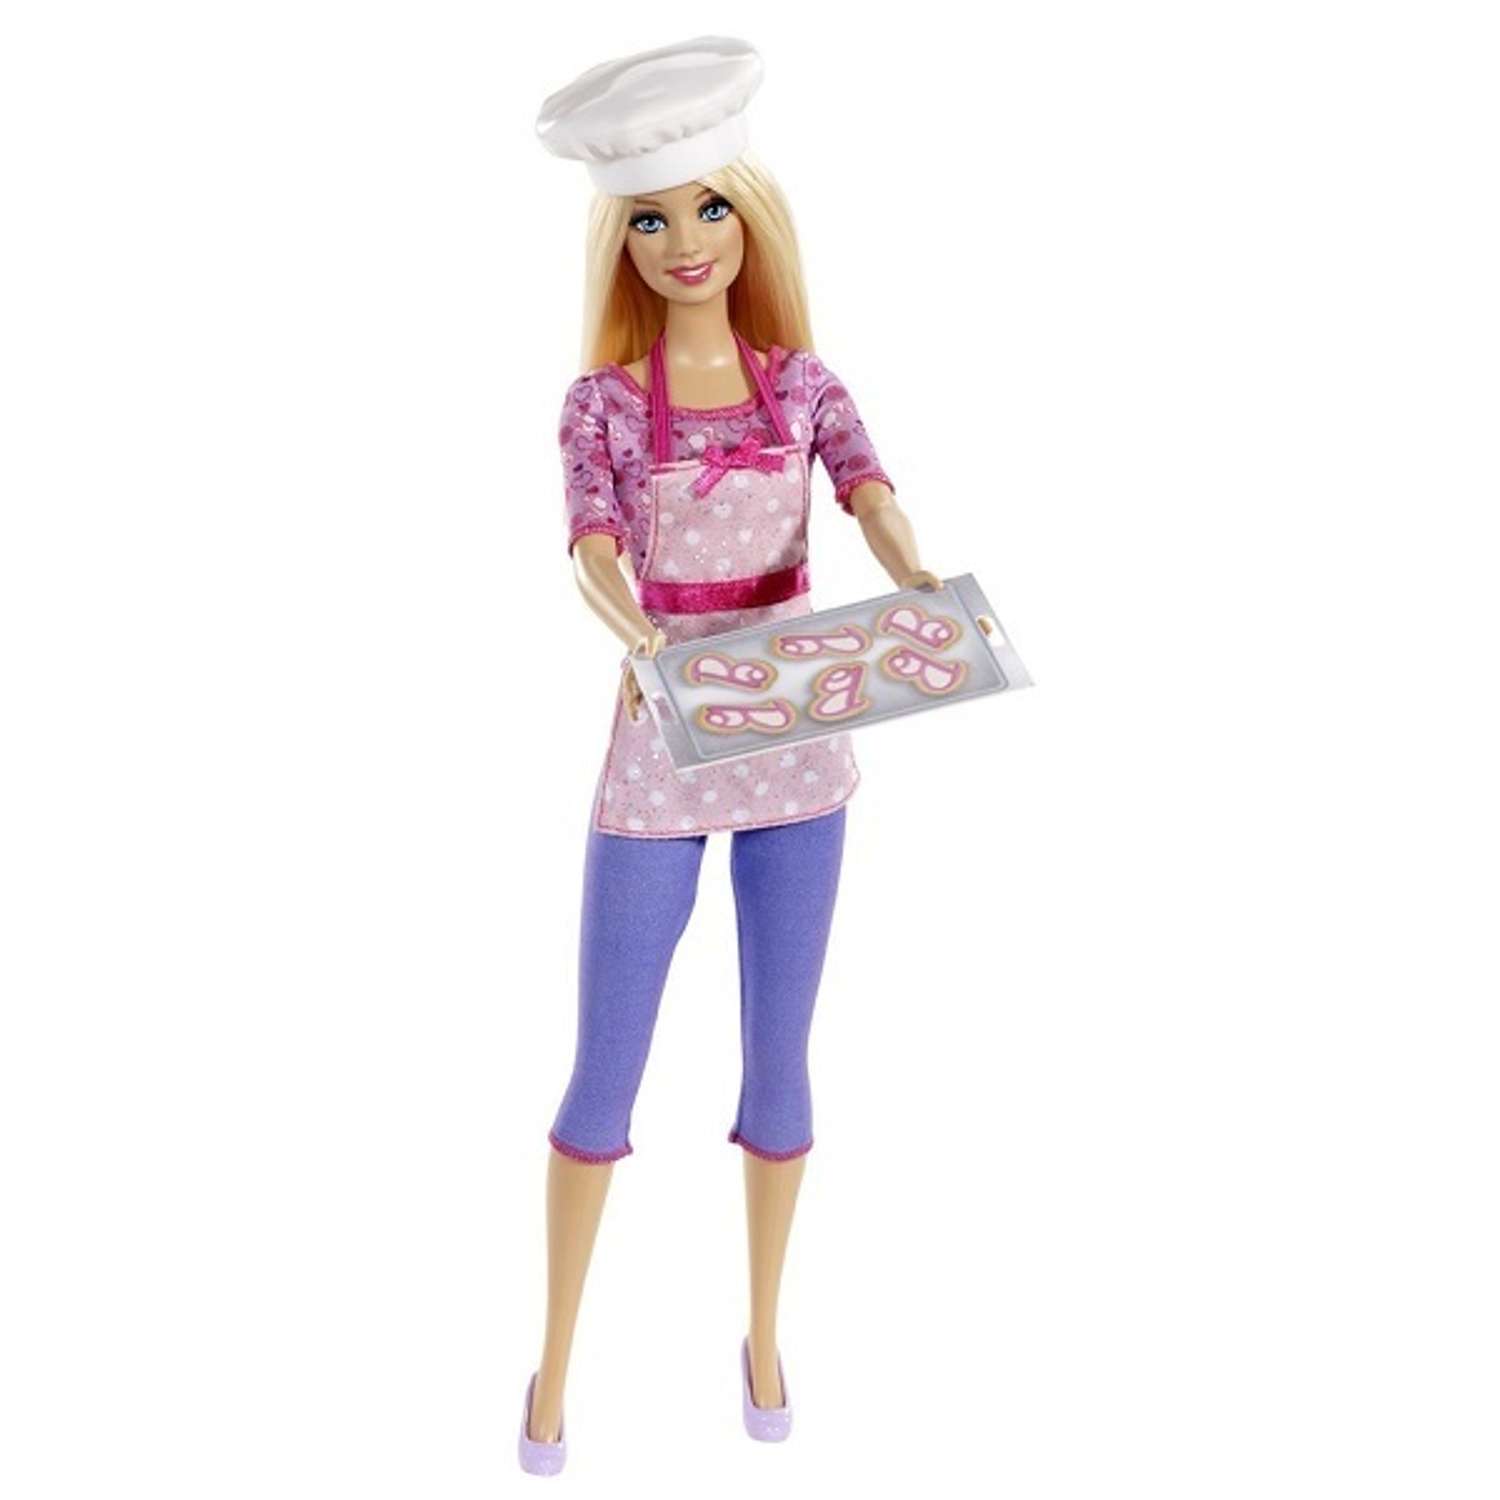 Куклу барби другую. Барби Маттел. Куклы Барби кем быть повар. Набор Barbie Барби и друзья кухня повар и официант, fcp66. Кукла Барби фирмы Маттел.